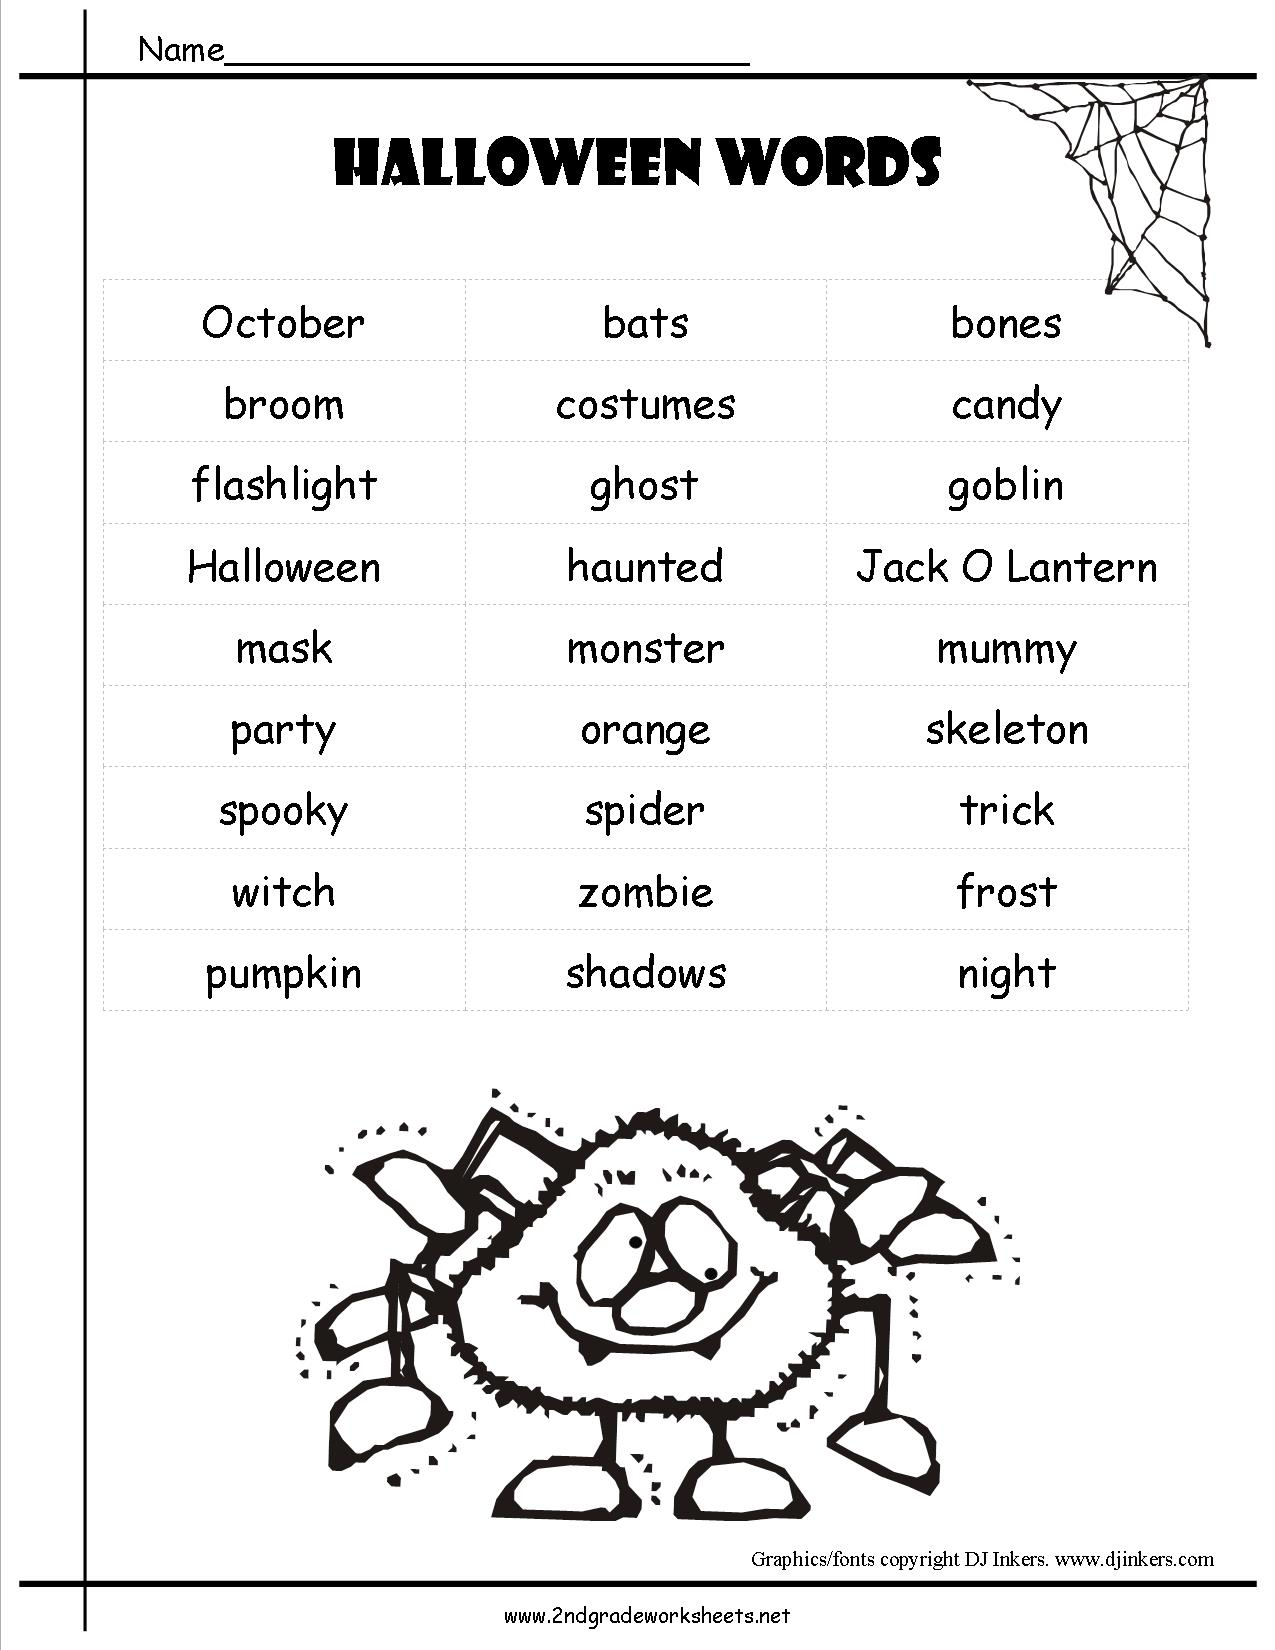 Kumon System Halloween Themed Worksheets Halloween Themed